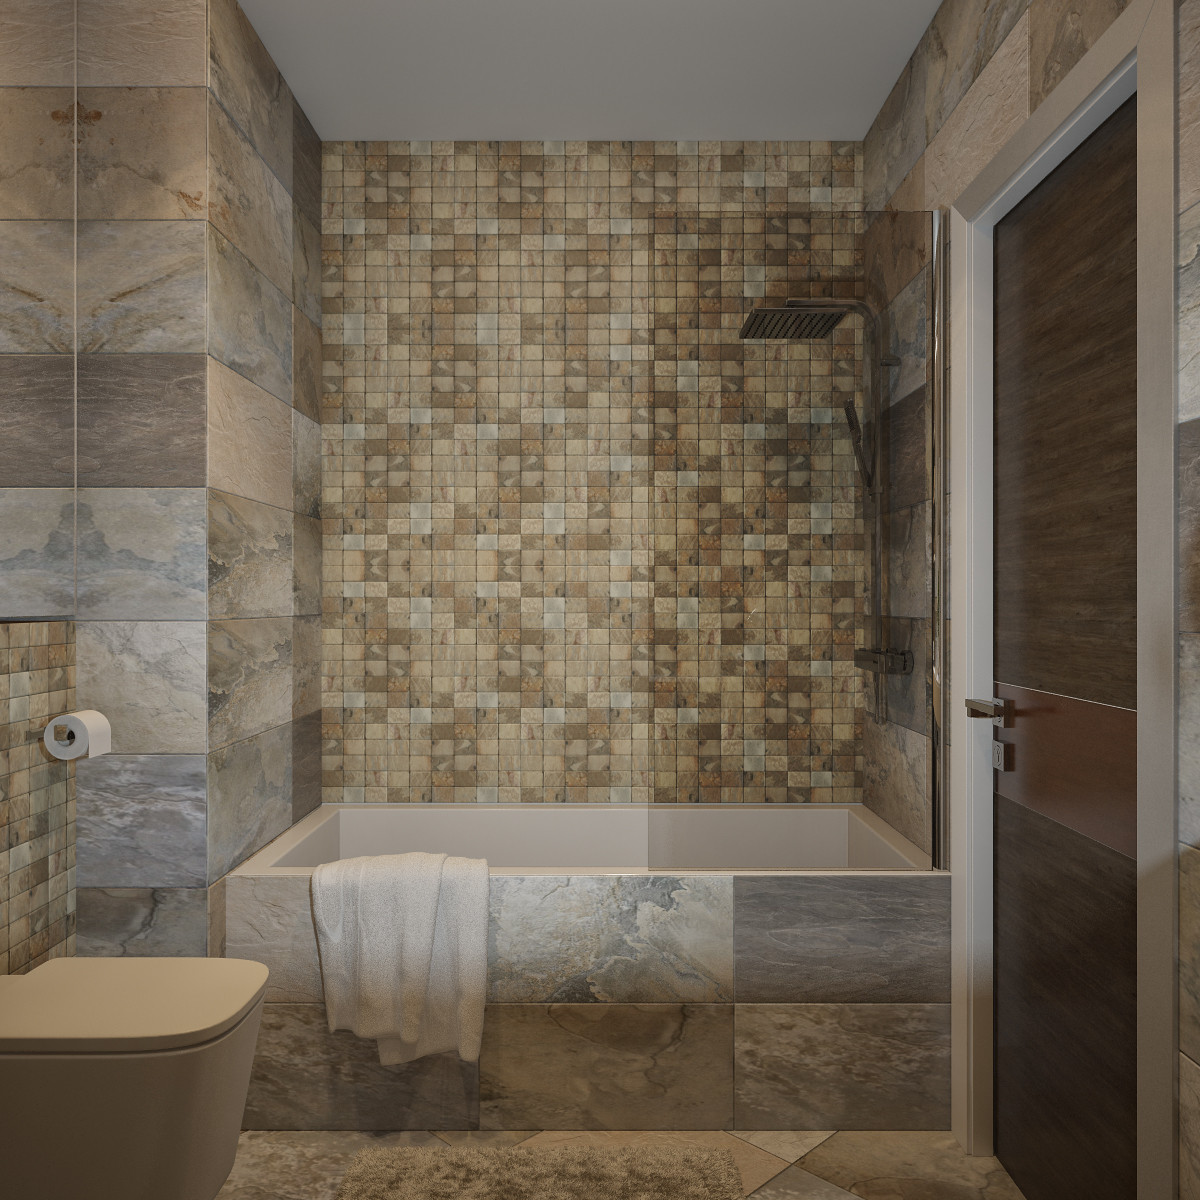 Bathroom Mosaic Tile
 Beautify Your Bathroom With Mosaics